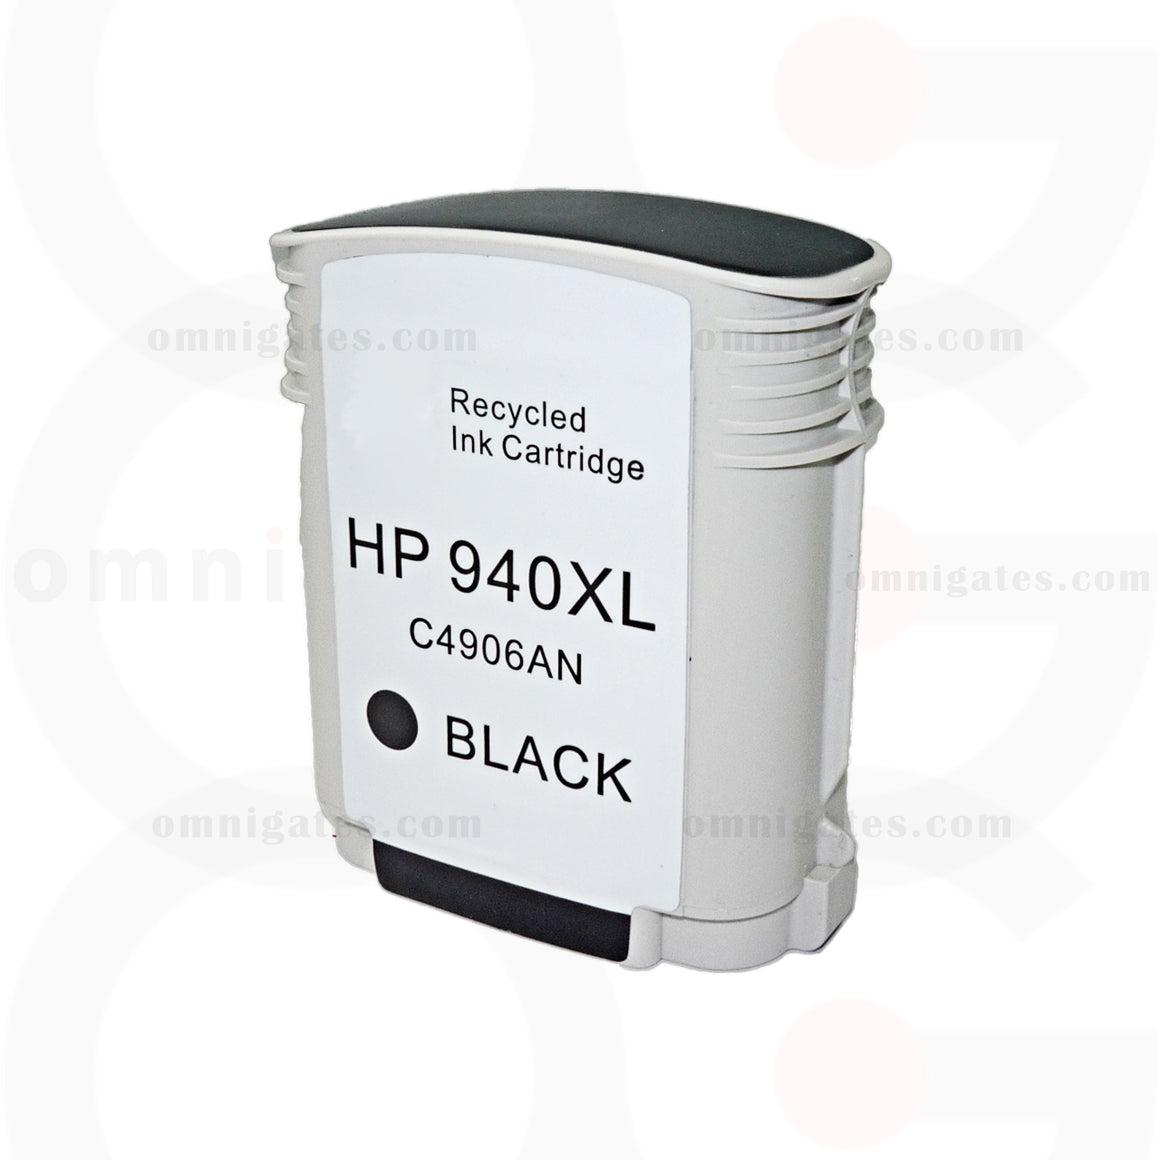 Black OGP Remanufactured HP C4906AN Inkjet Cartridge